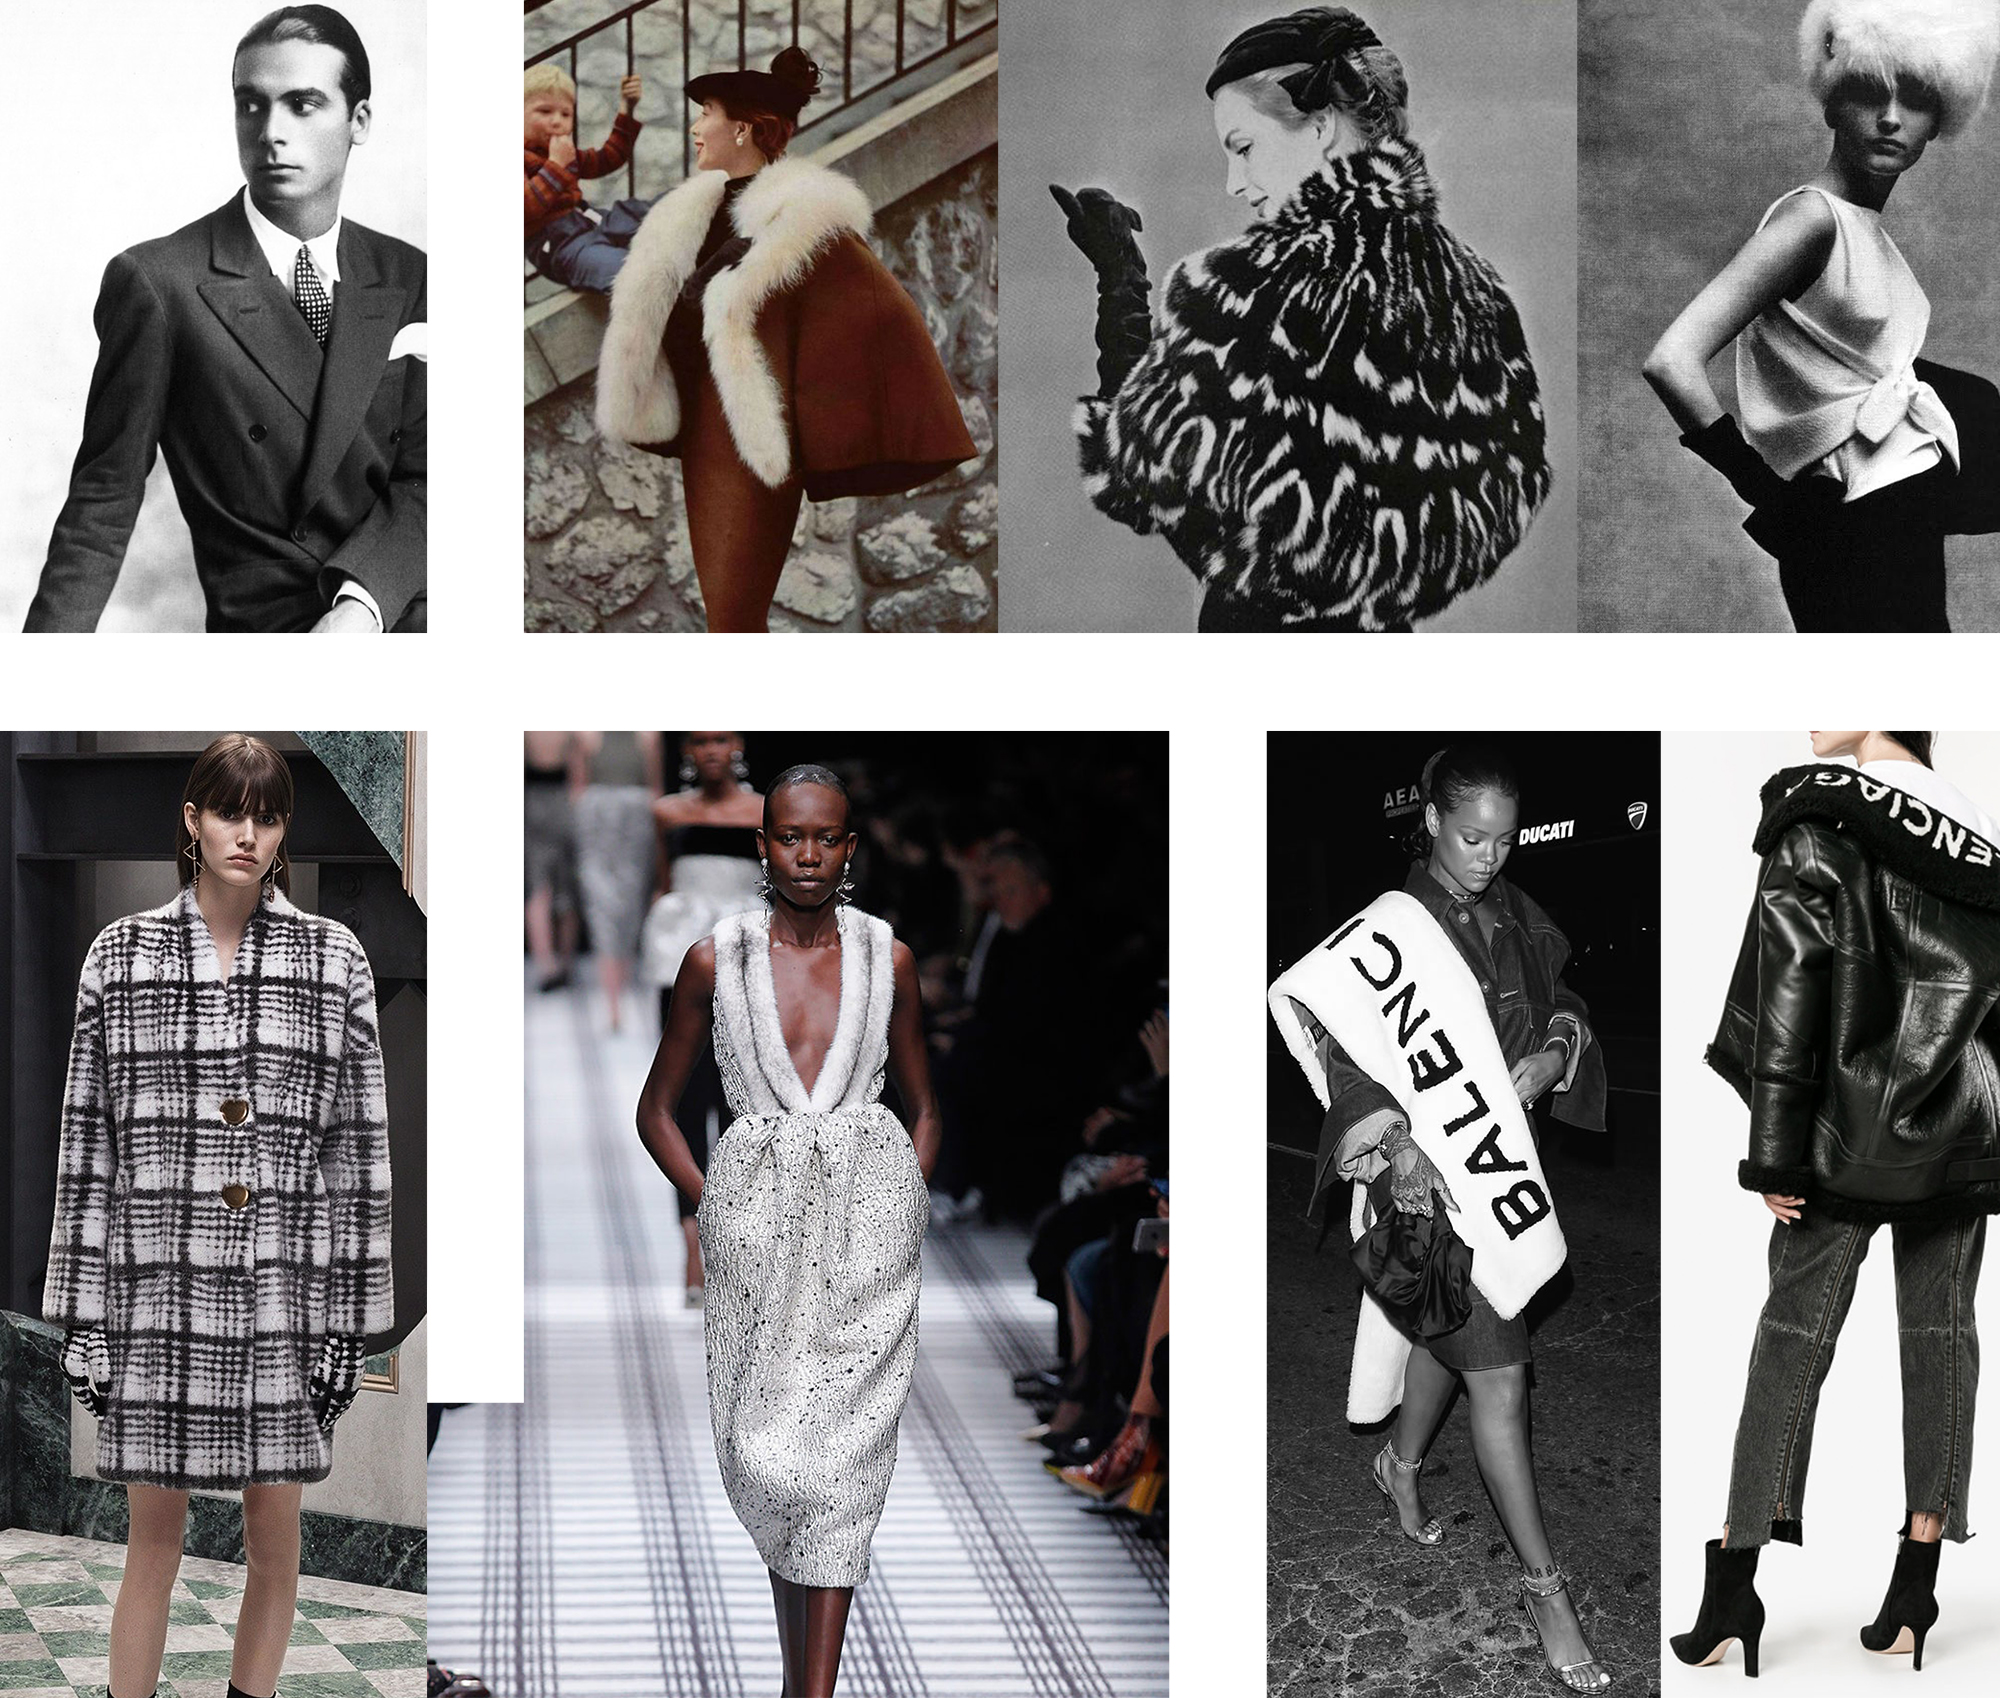 Balenciaga Goes Where Fashion Hasn't Dared Go Before - The New